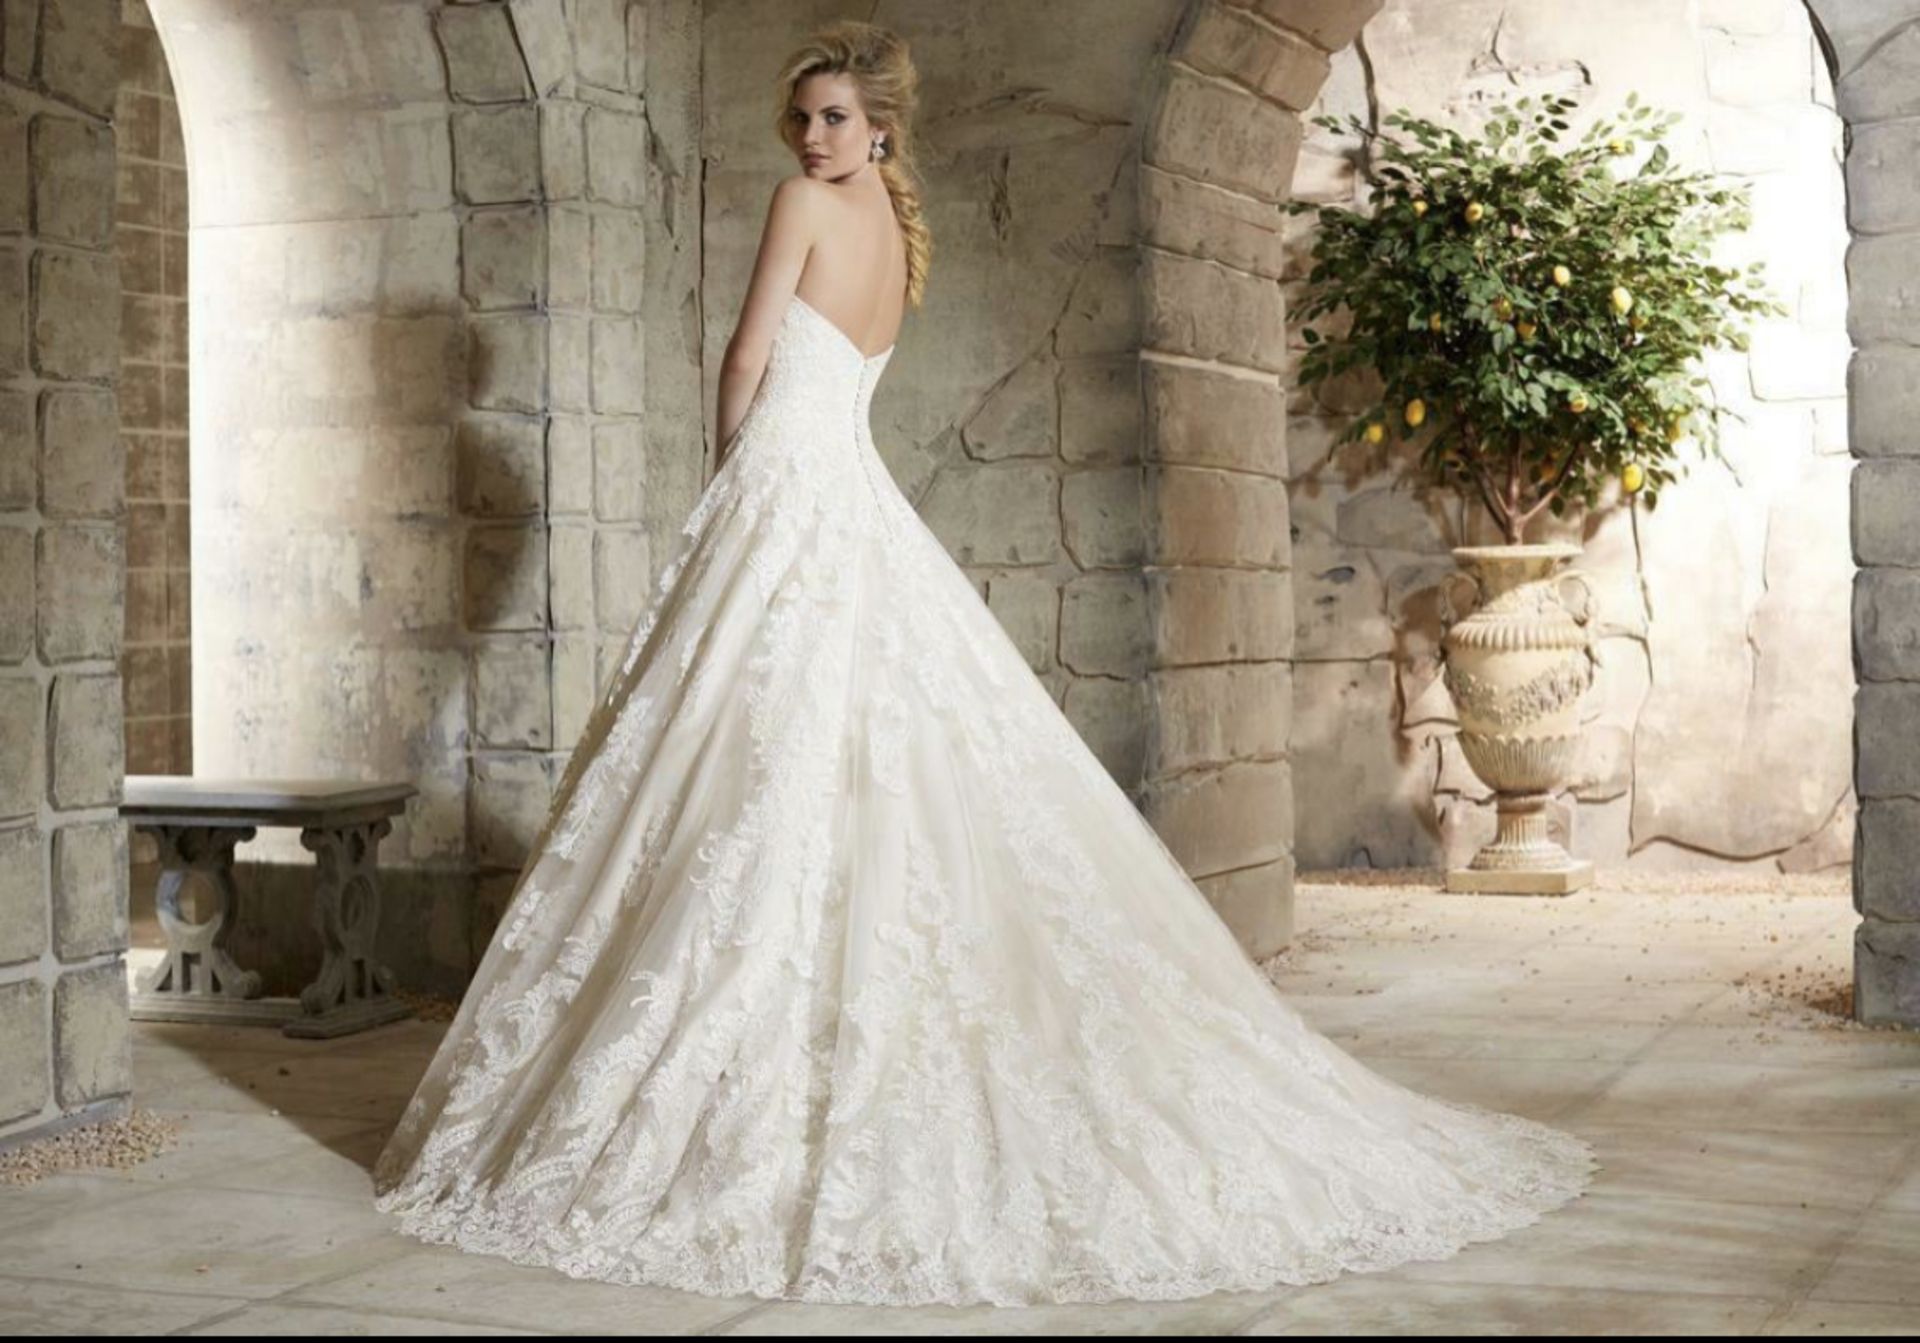 1 x MORI LEE '2787' Stunning Strapless Lace And Chiffon Designer Wedding Dress RRP £1,200 UK 12 - Image 11 of 12